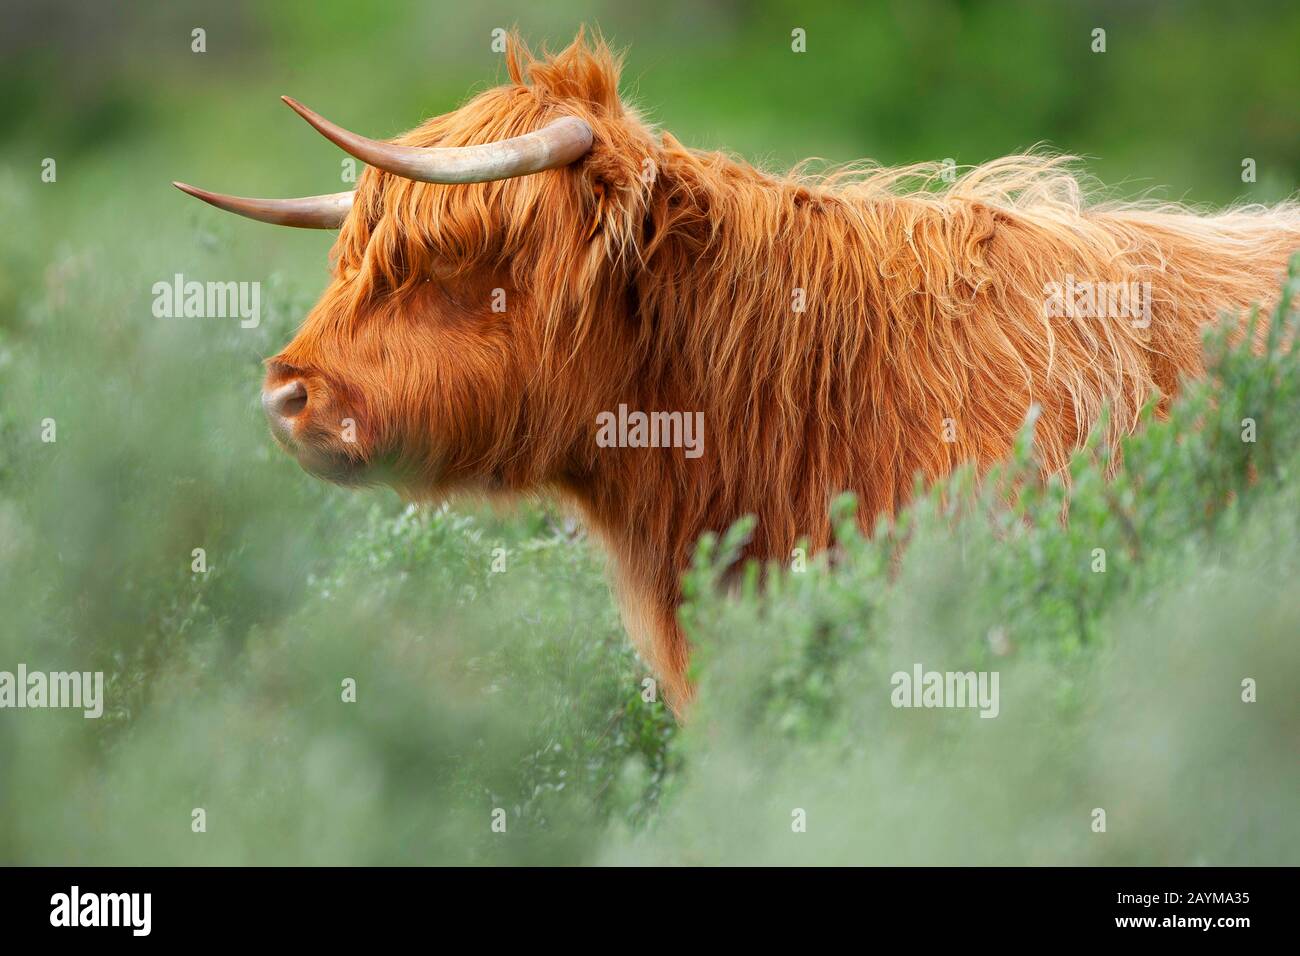 Scottish Highland Cattle, Kyloe, Highland cow, Heelan coo (Bos primigenius f. taurus), portrait, Belgium, West Flanders, De Westhoek, De Panne Stock Photo